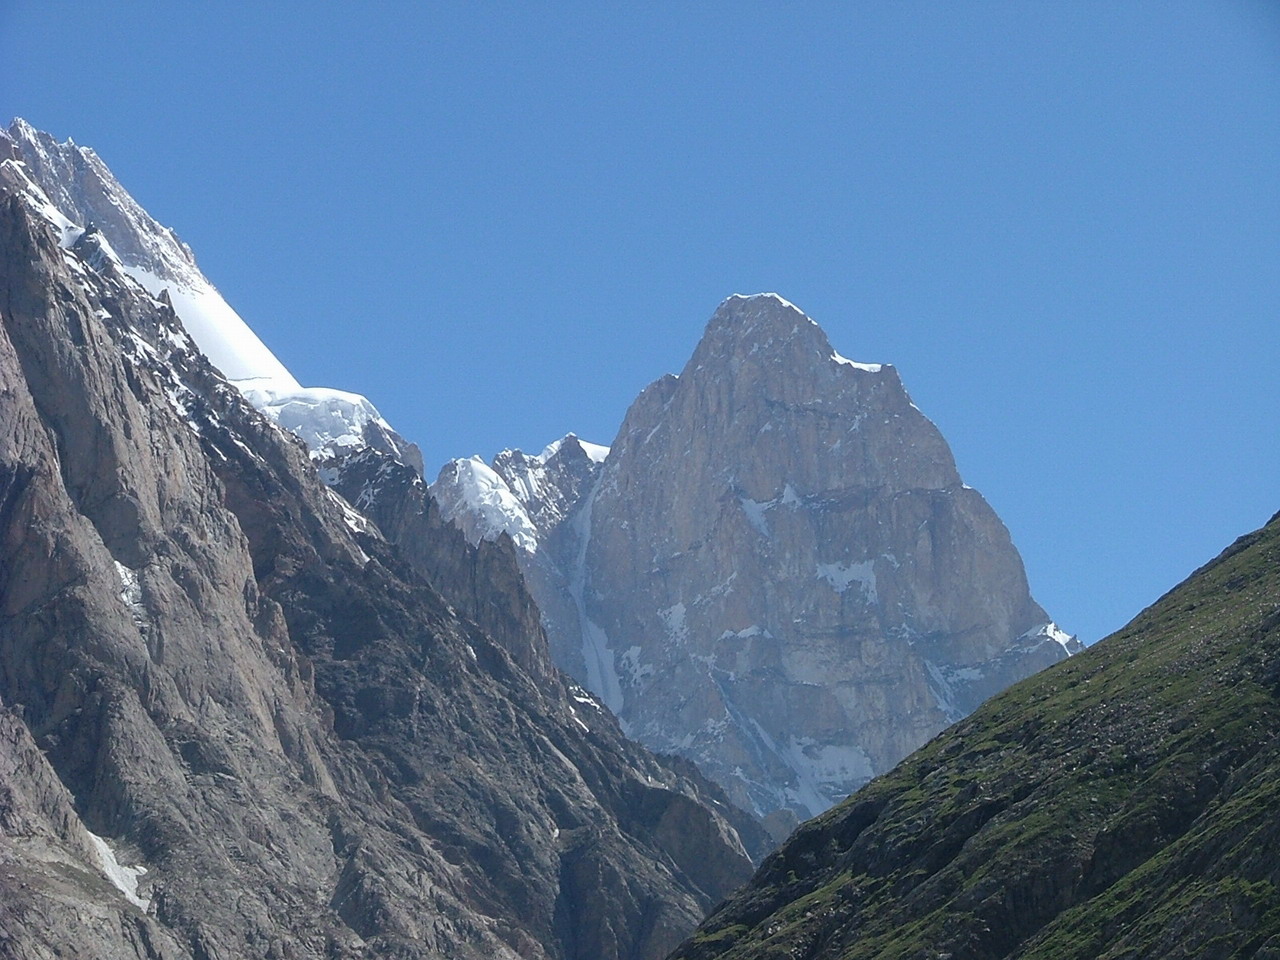 K6 or Baltistan Peak, 7,282 m (23,888 ft)